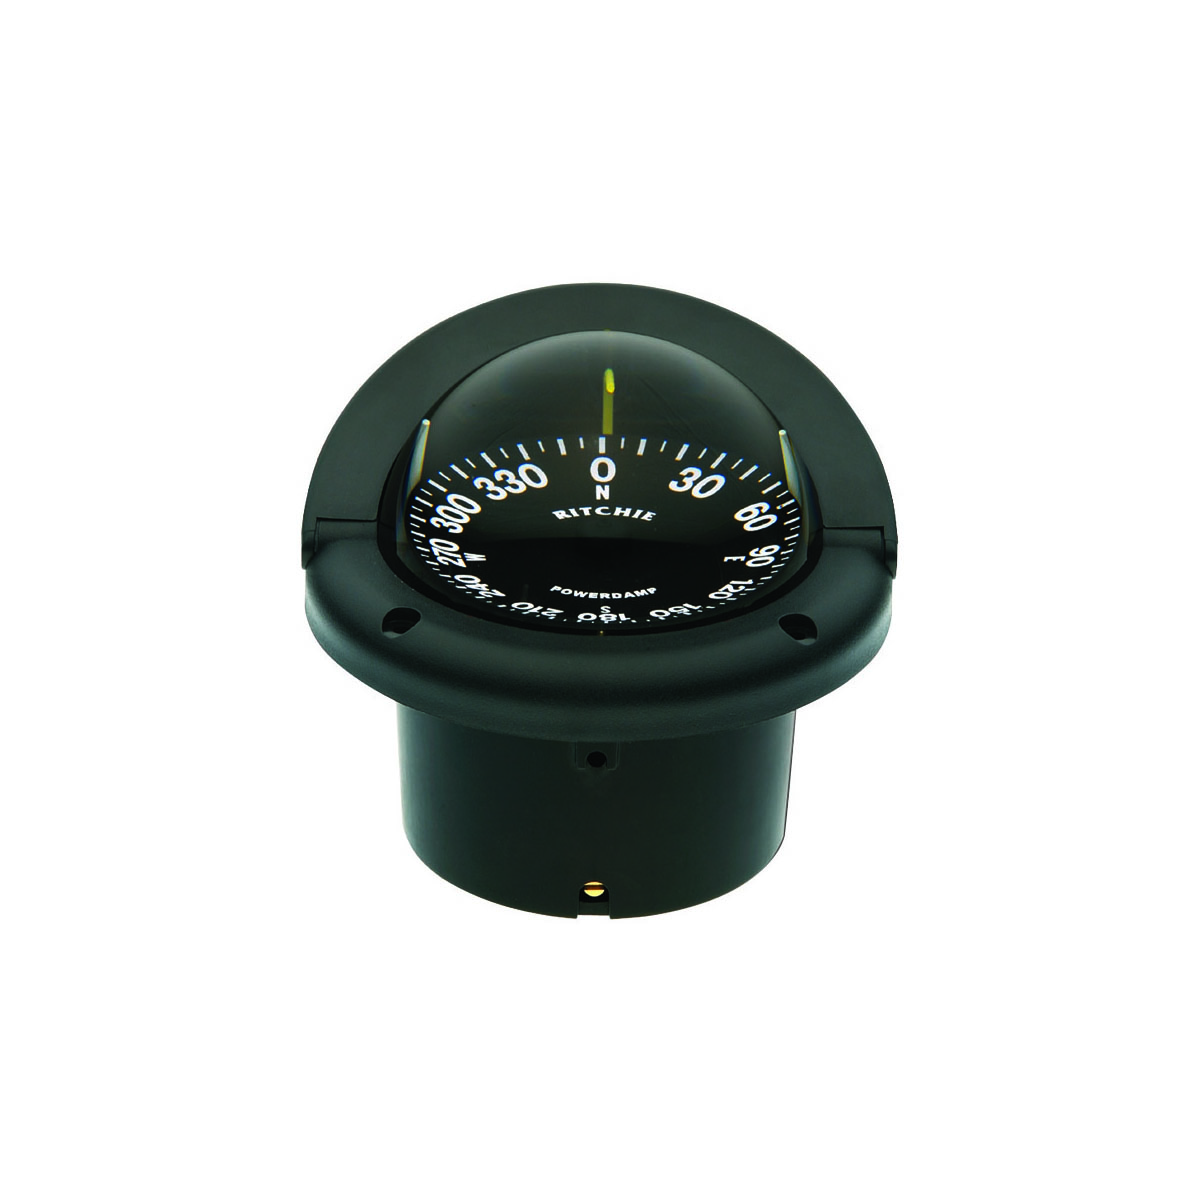 Black Ritchie Hf-743 Helmsman Combidial Compass Flush Mount